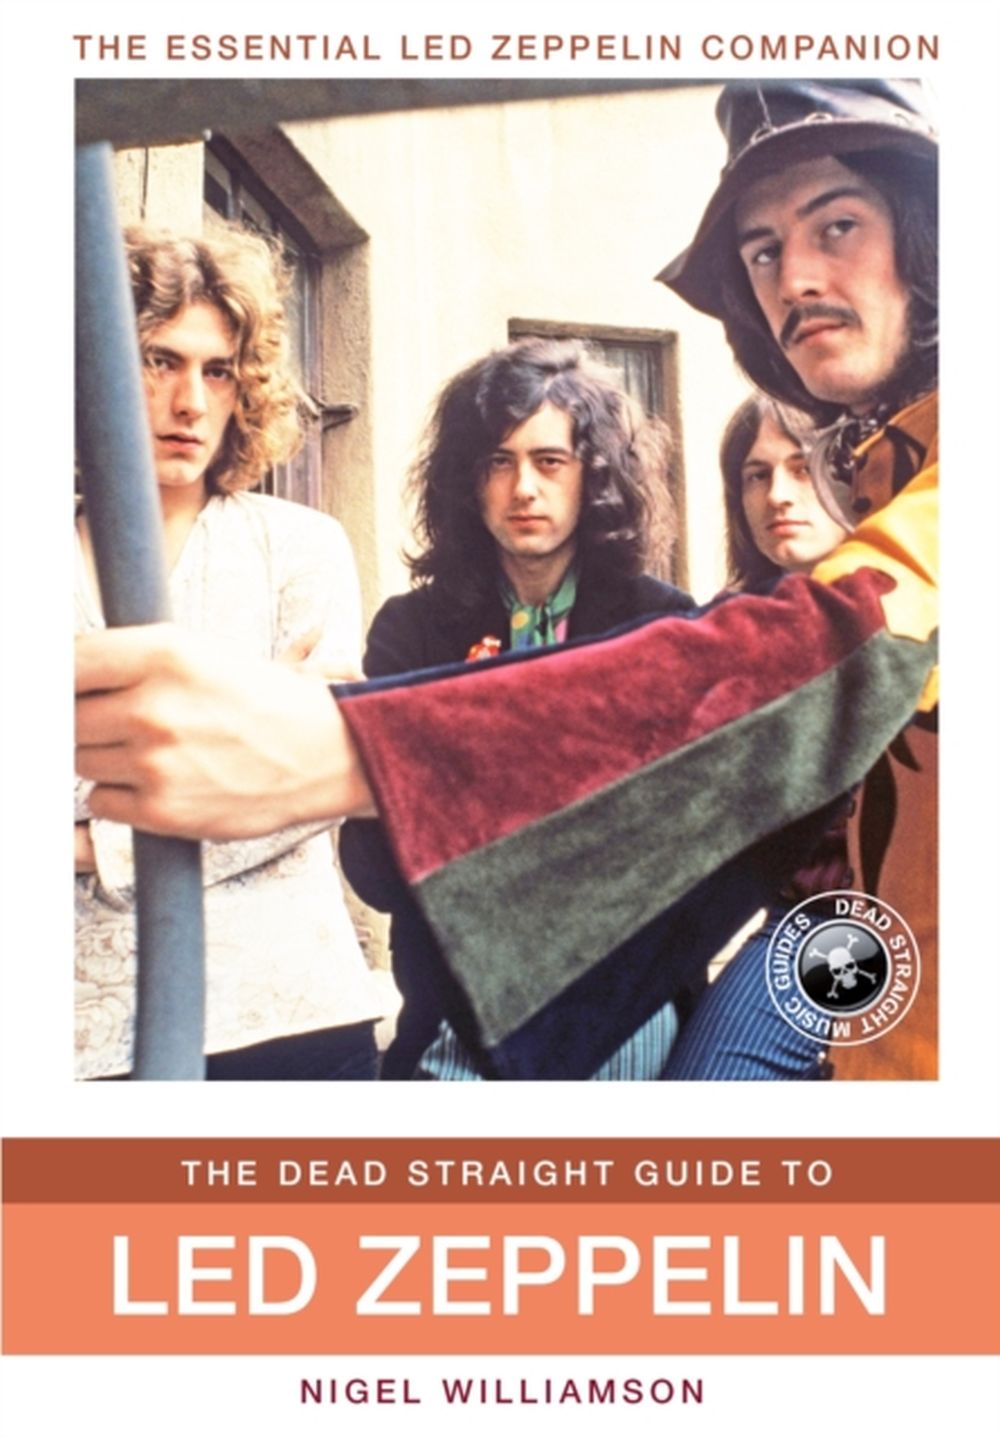 Led Zeppelin - Williamson, Nigel - Dead Straight Guide To Led Zeppelin, The - Book - New